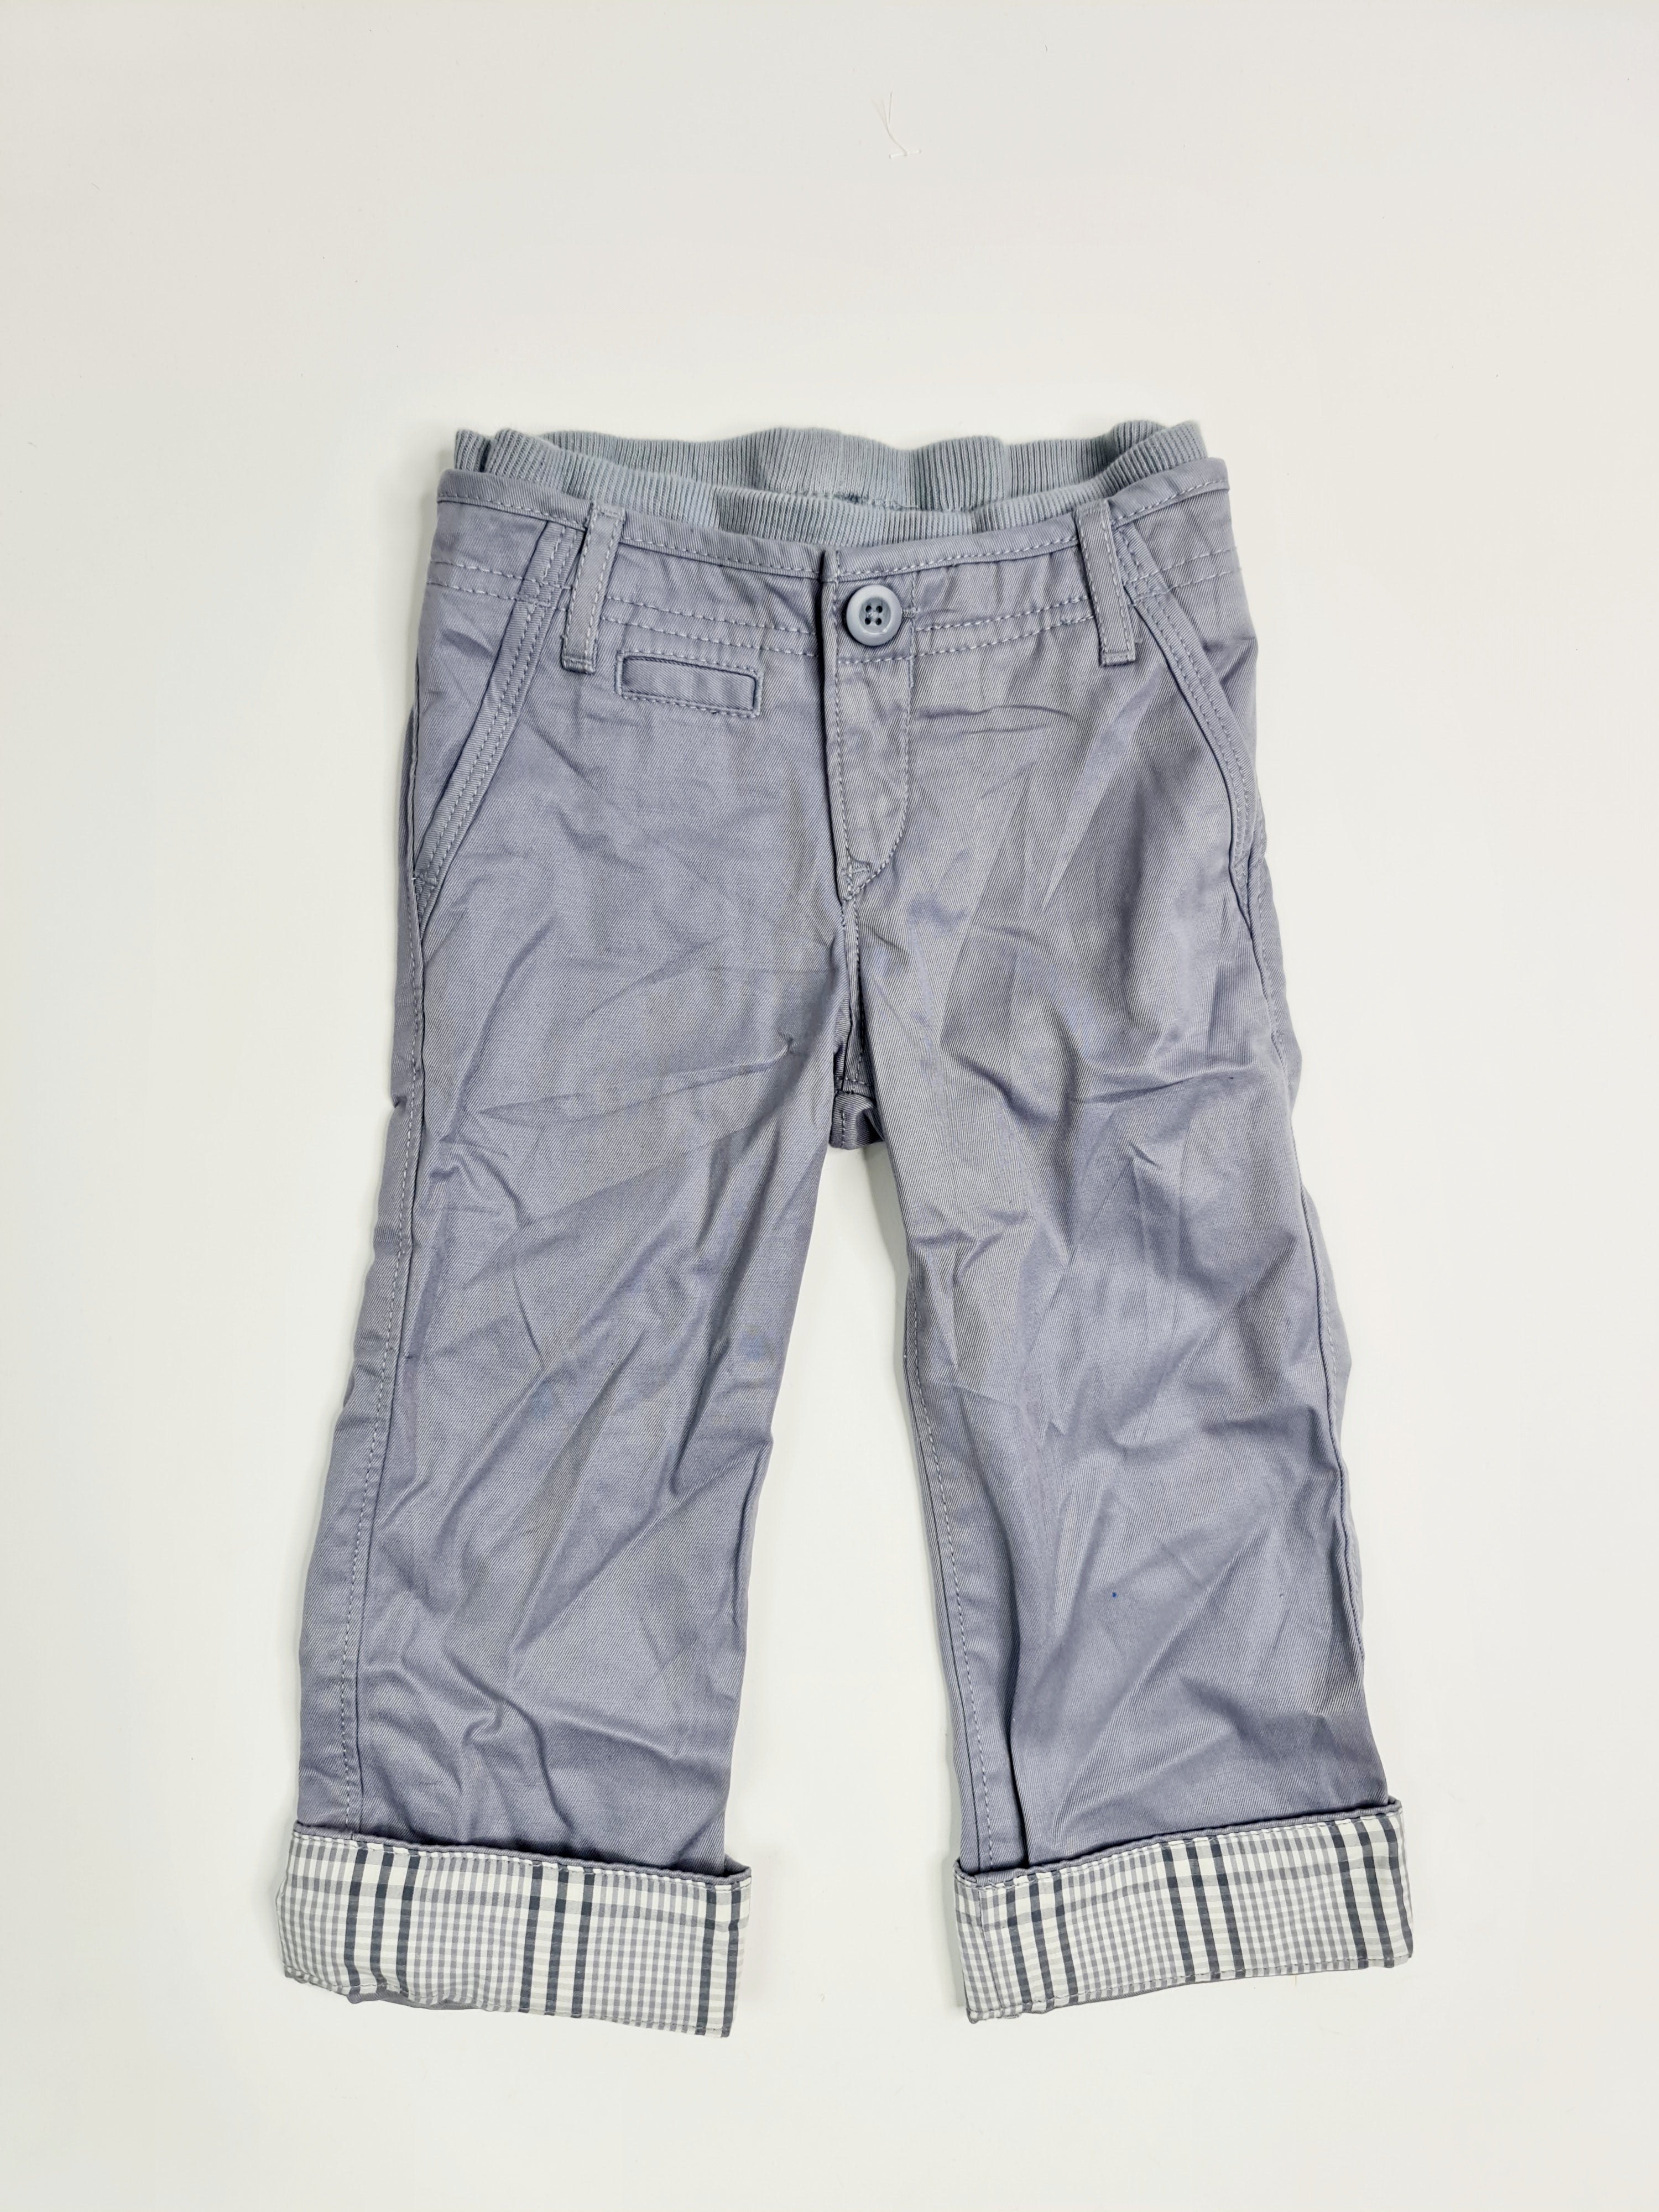 Pantalones color gris, marca babyGap para bebé de 18 a 24 meses